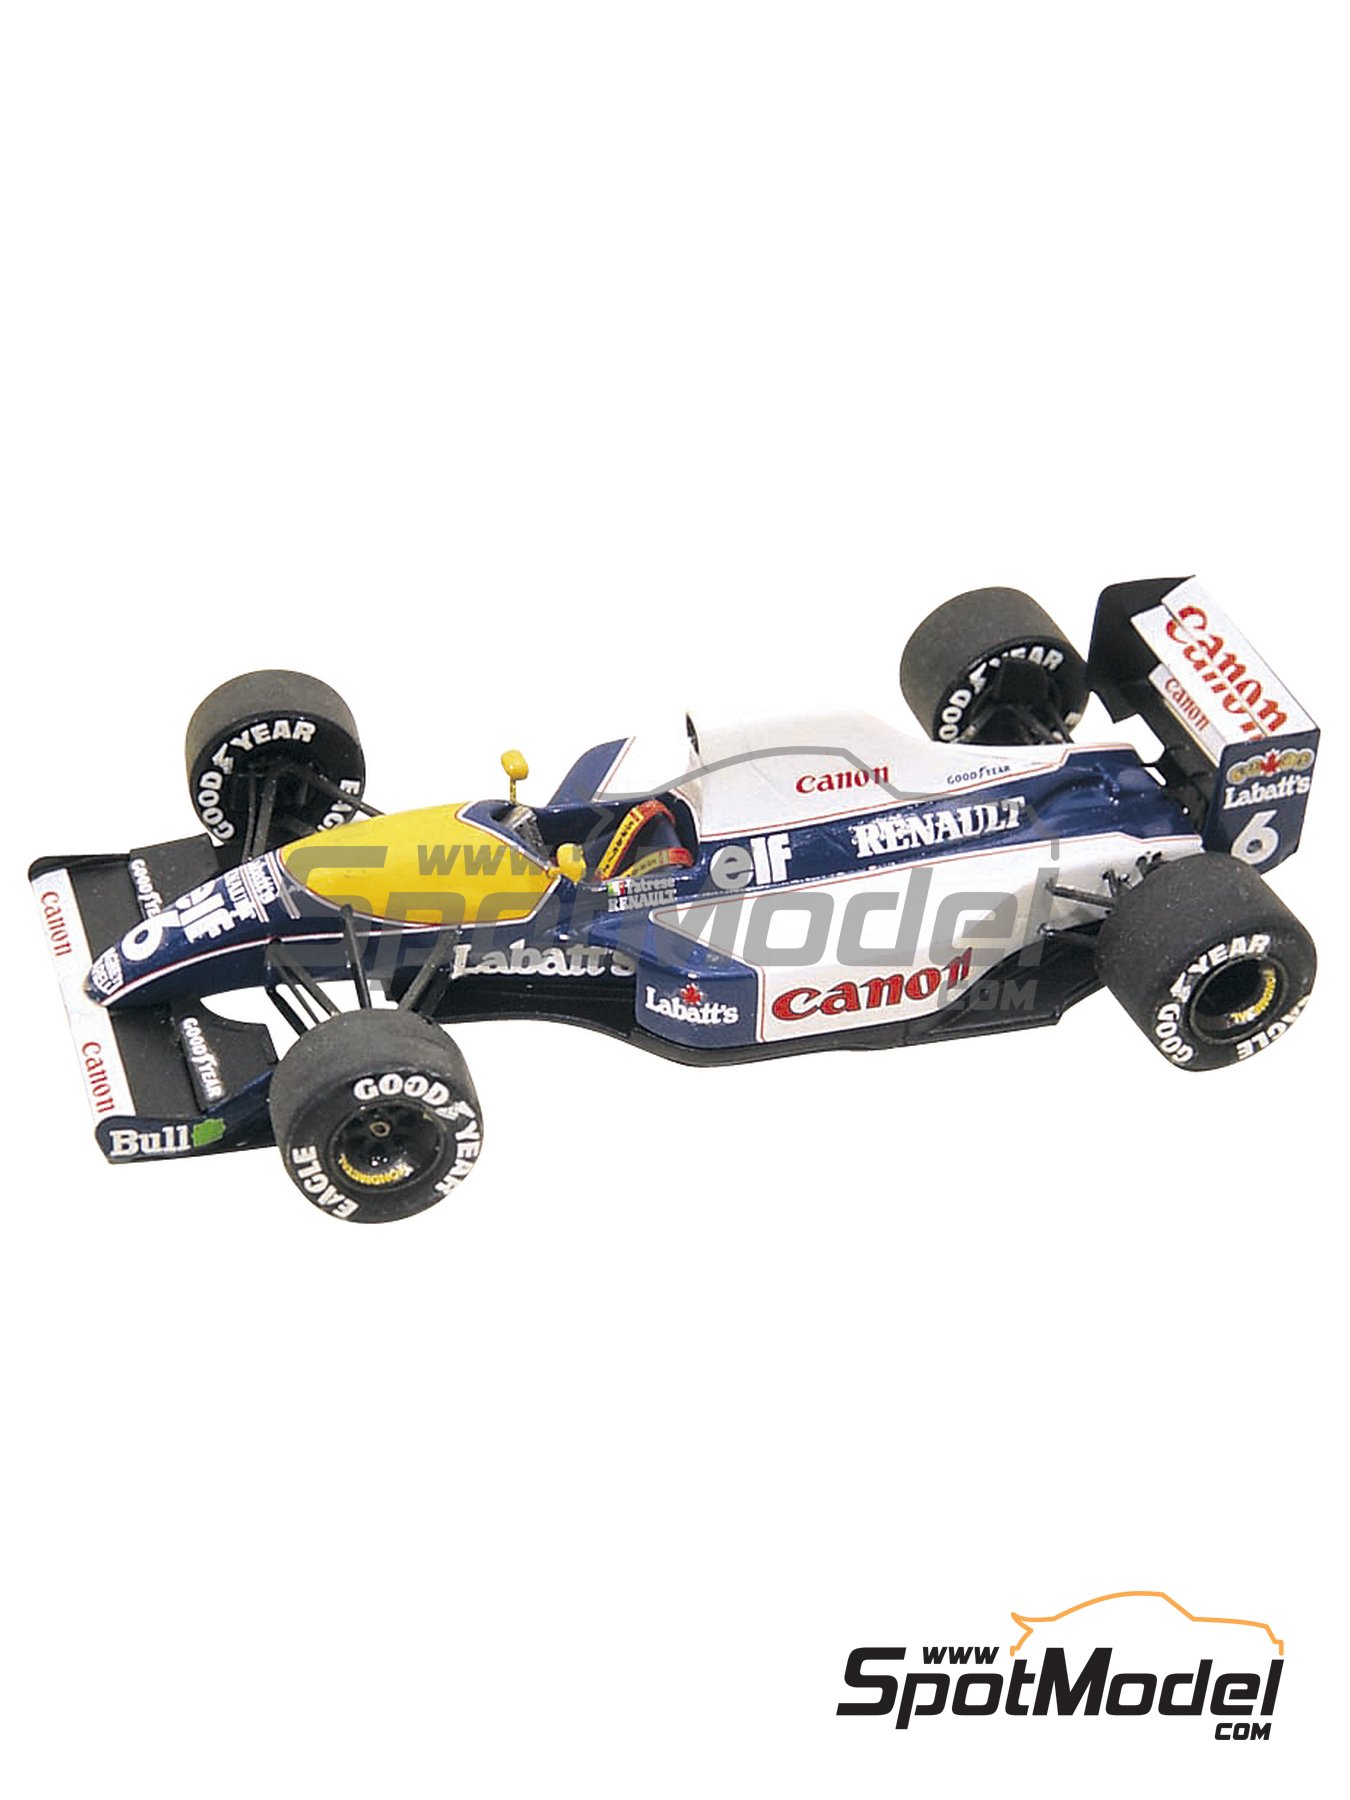 Williams Renault FW14 Williams Grand Prix Engineering Team sponsored by  Camel - Brazilian Formula 1 Grand Prix 1991. Car scale model kit in 1/43  scale